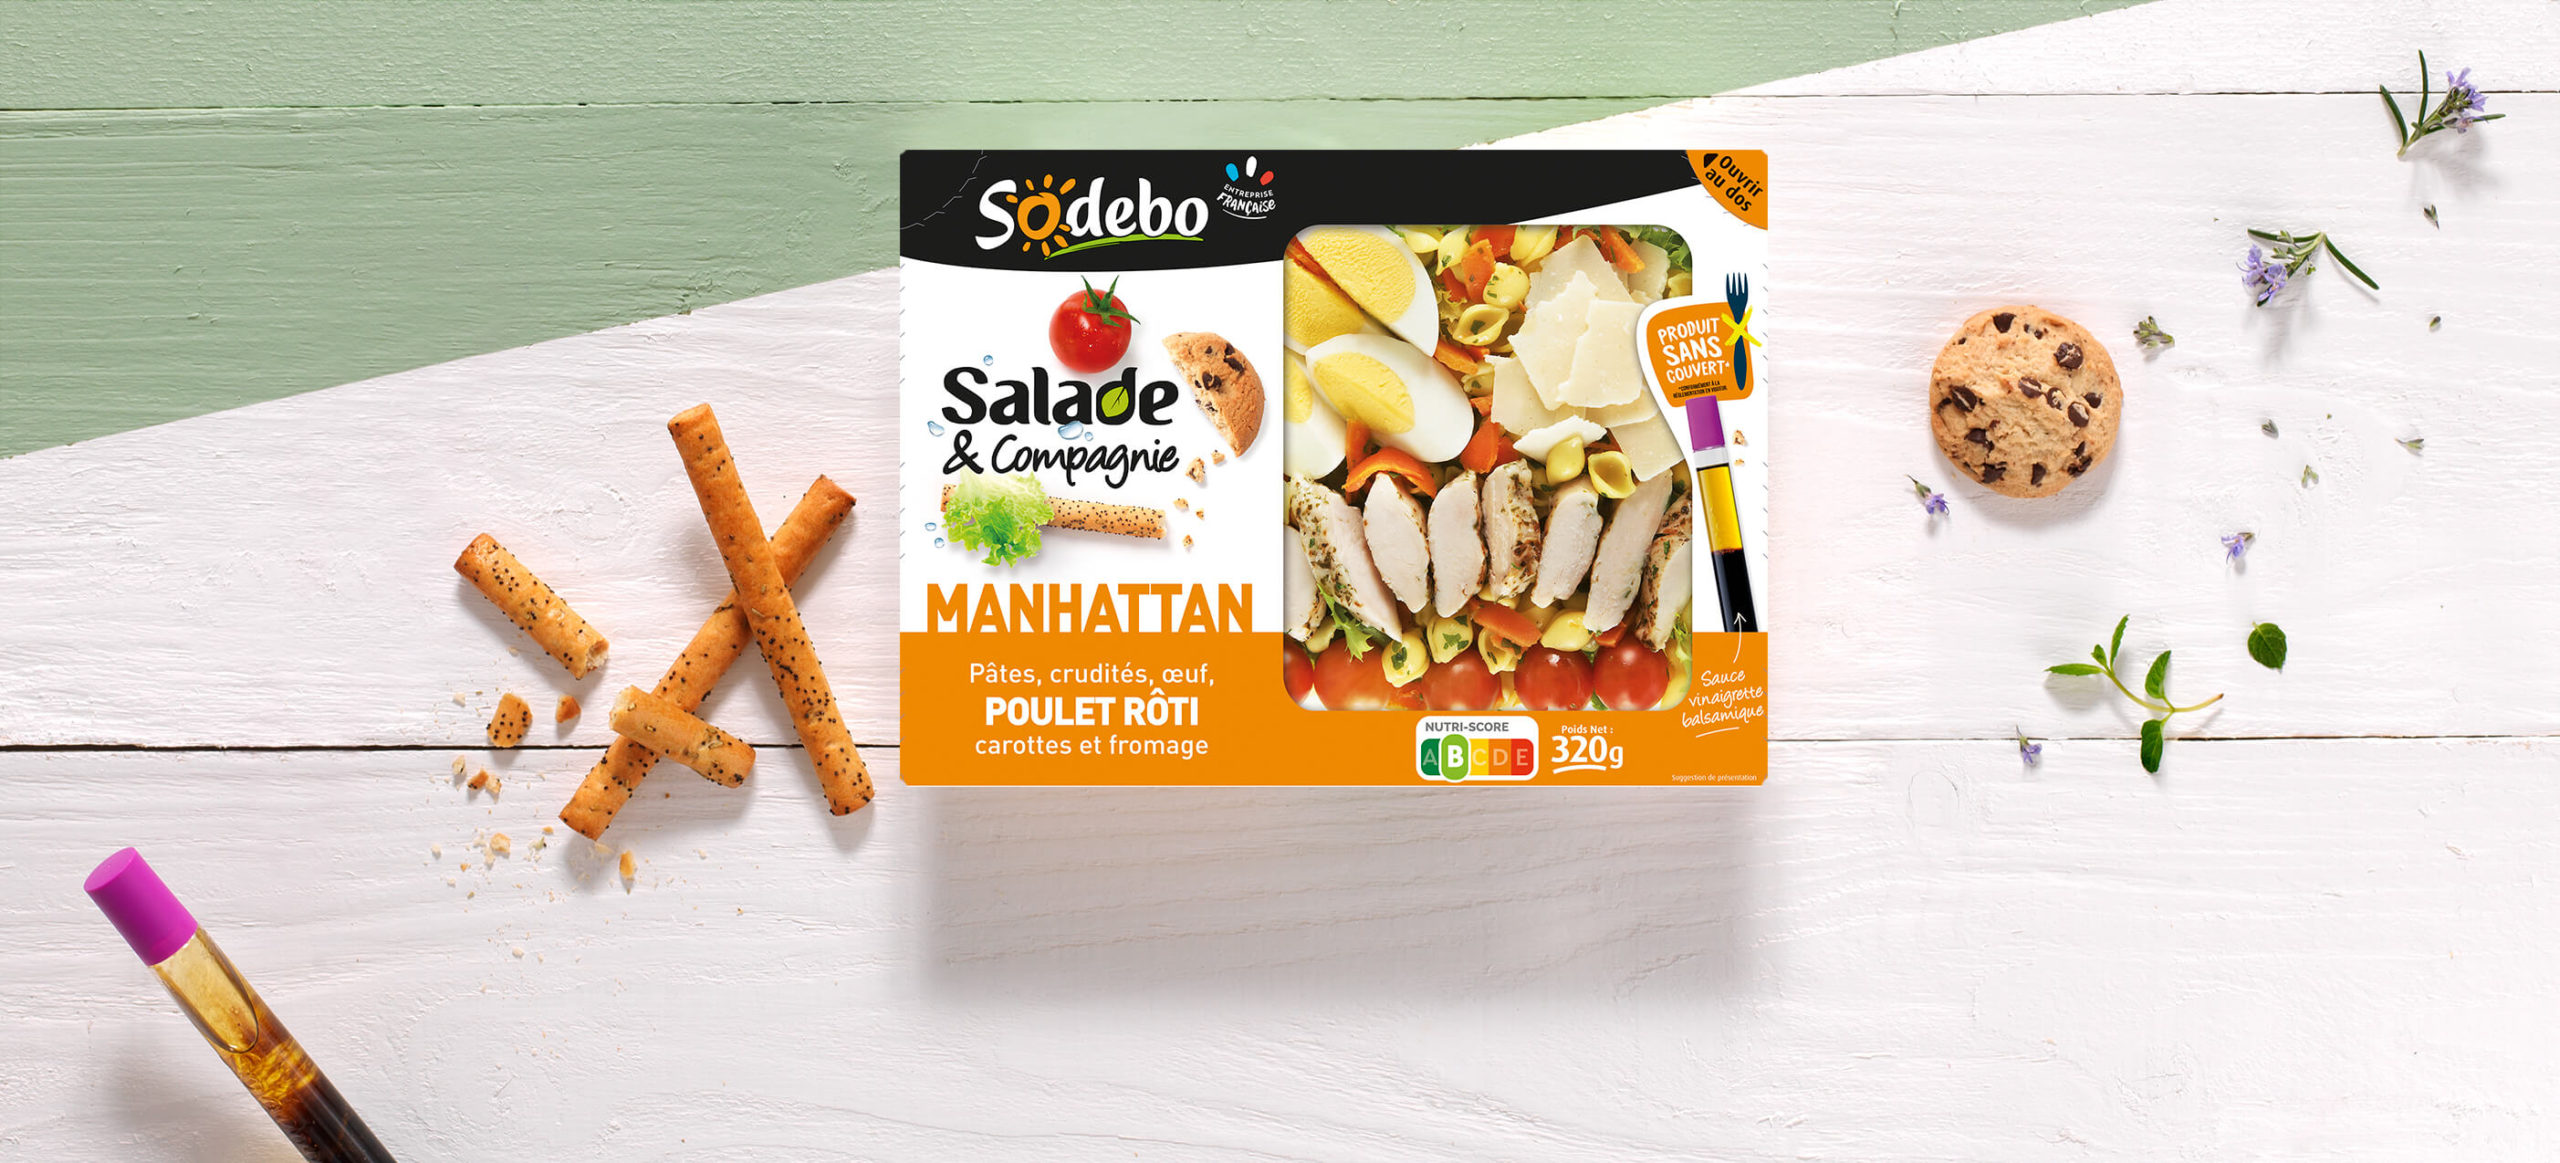 Sodebo_Salade&Compagnie_Manhattan